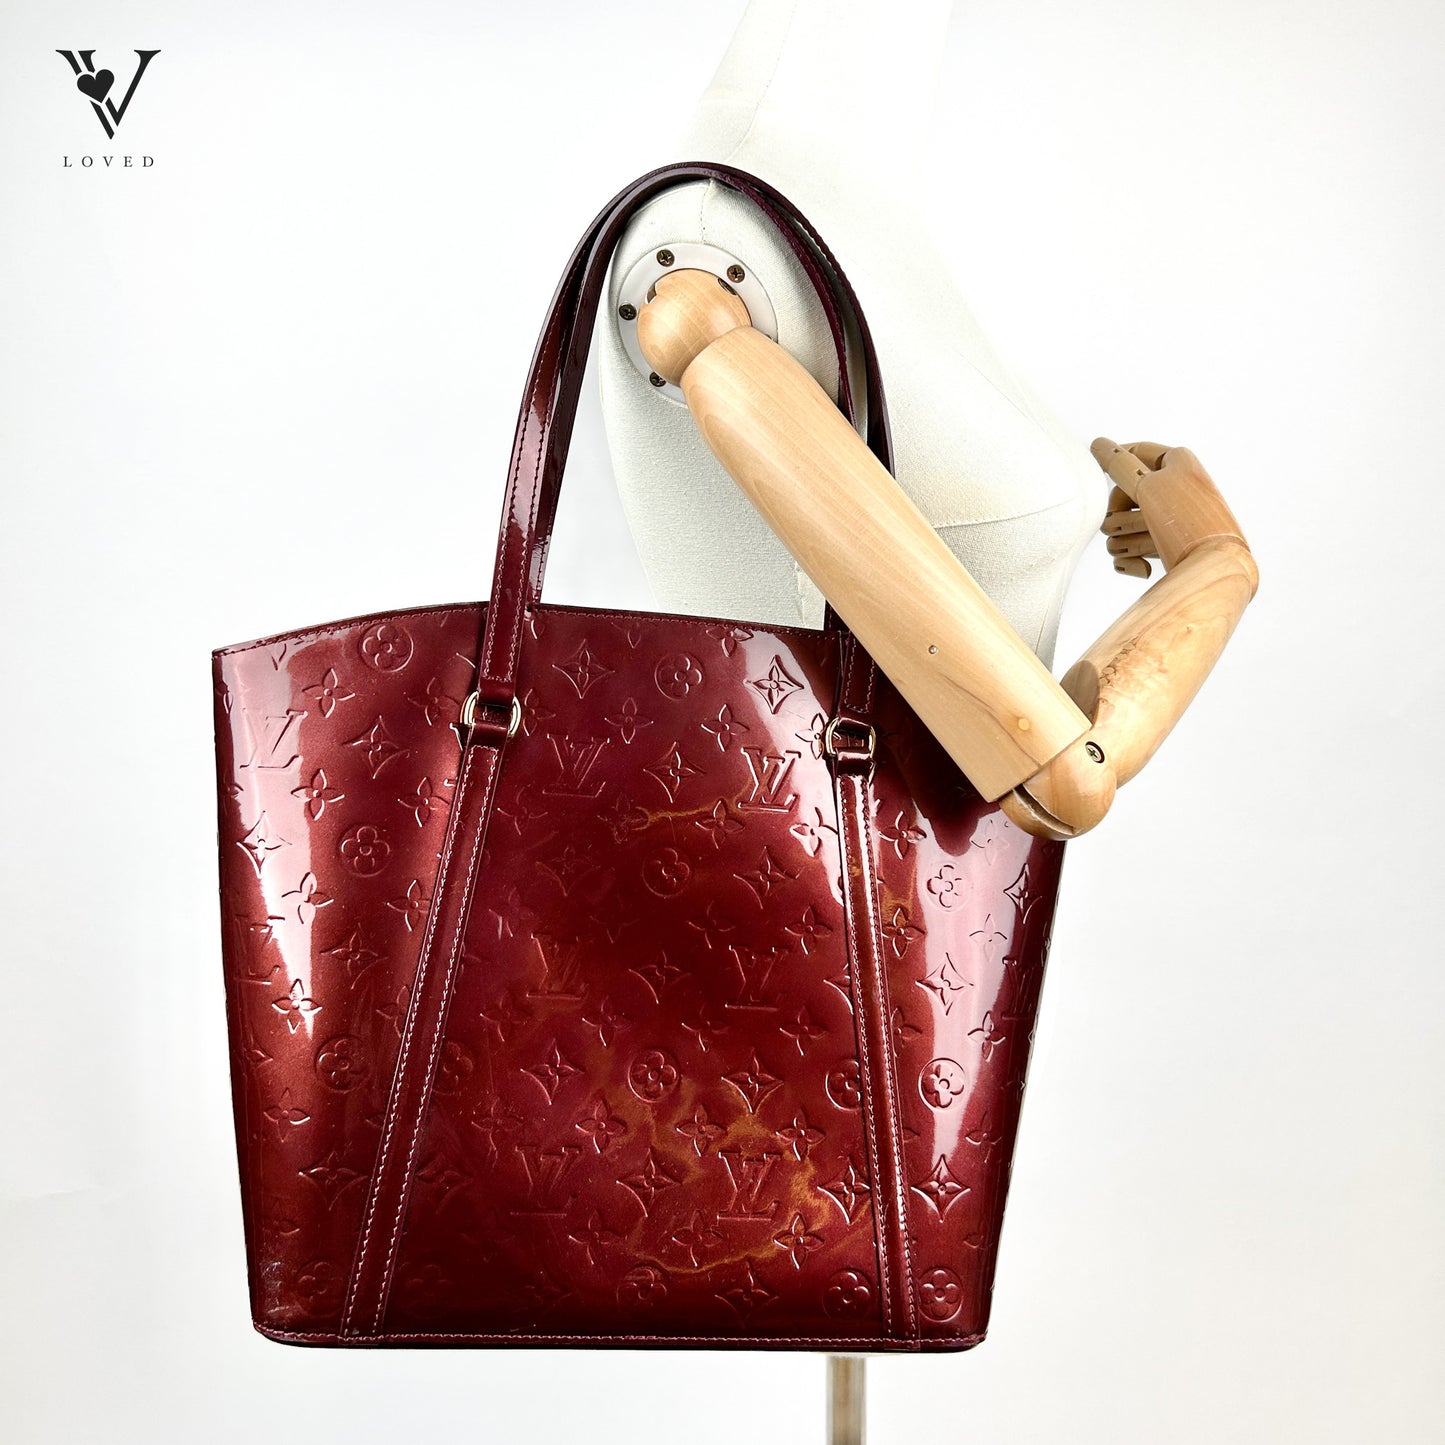 Avalon Tote Bag in Amarante Vernis Leather